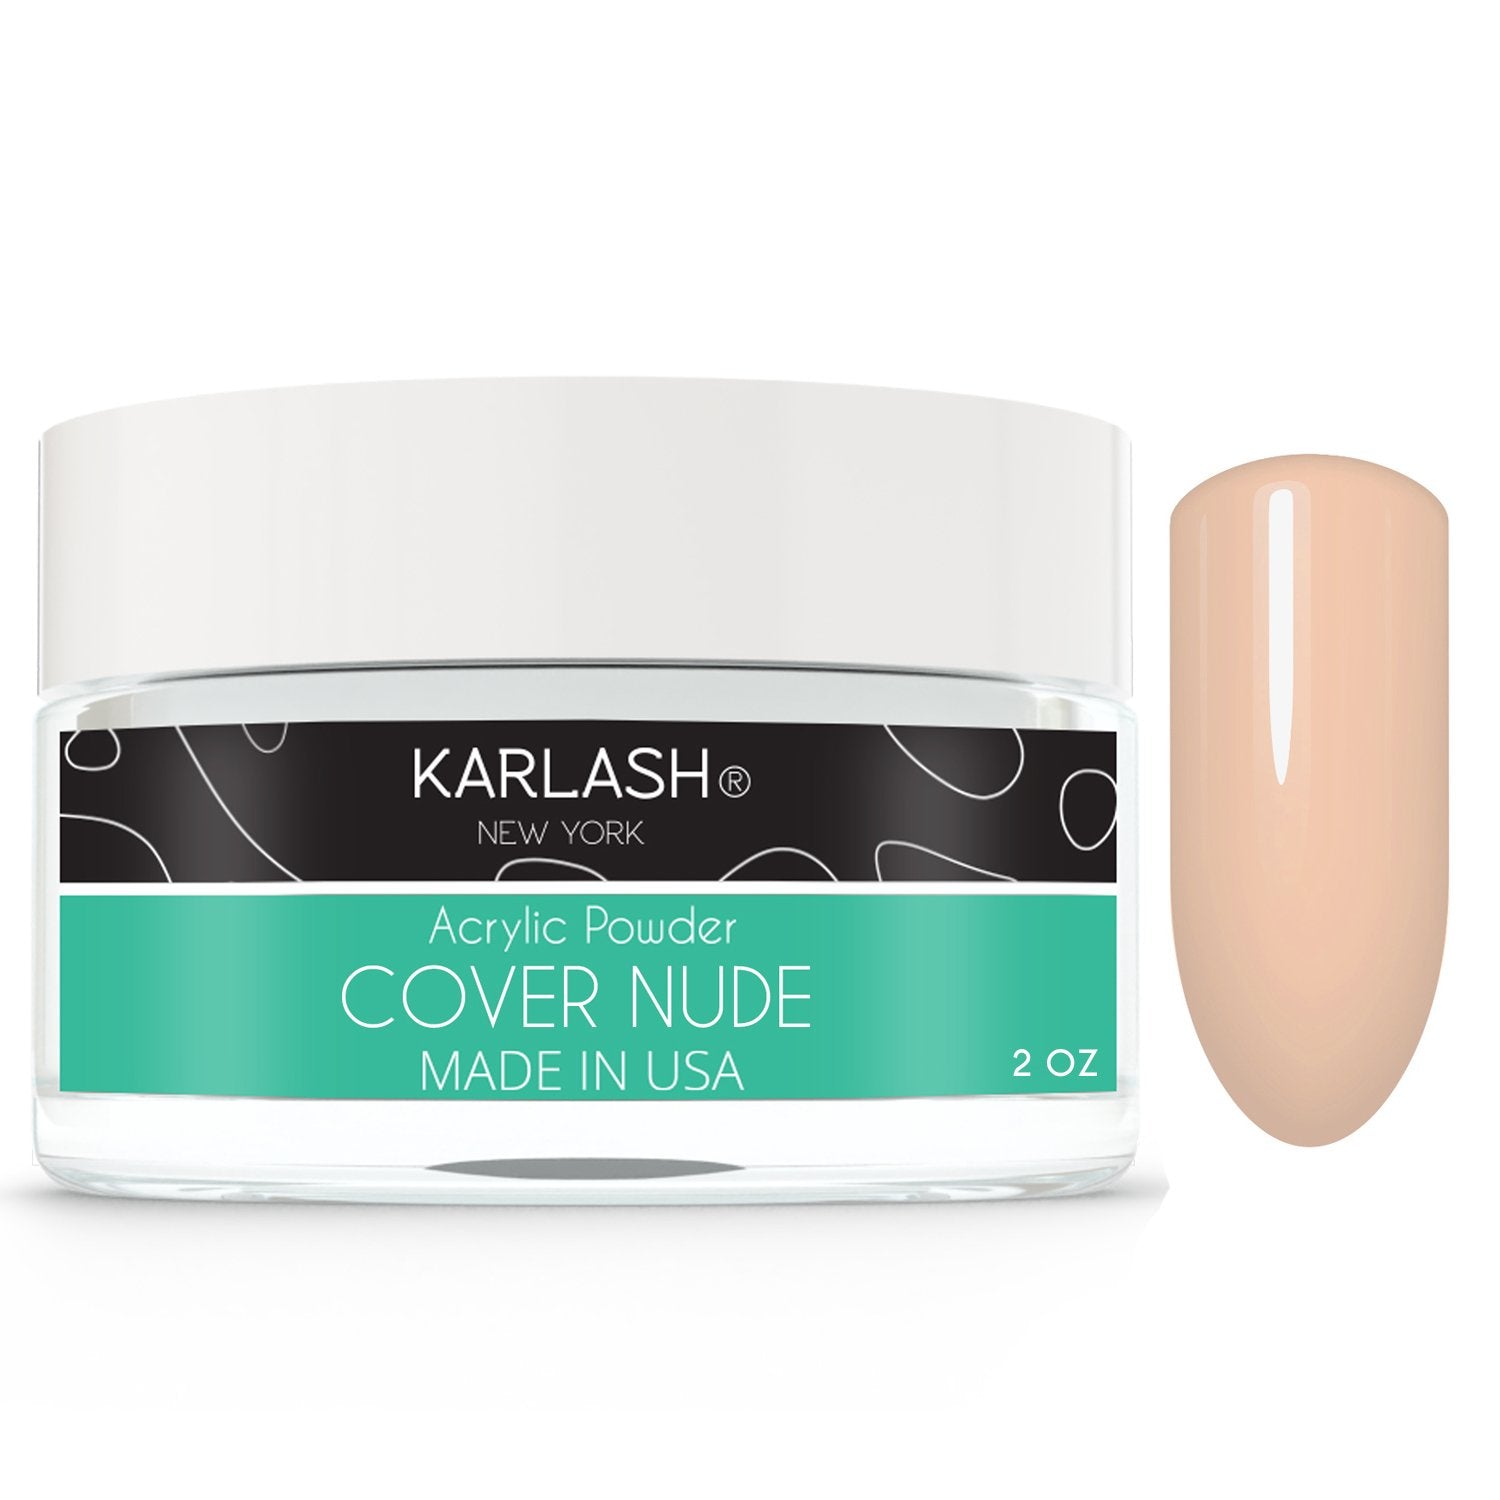 Karlash Professional Acrylic Powder 2 oz Cover Nude